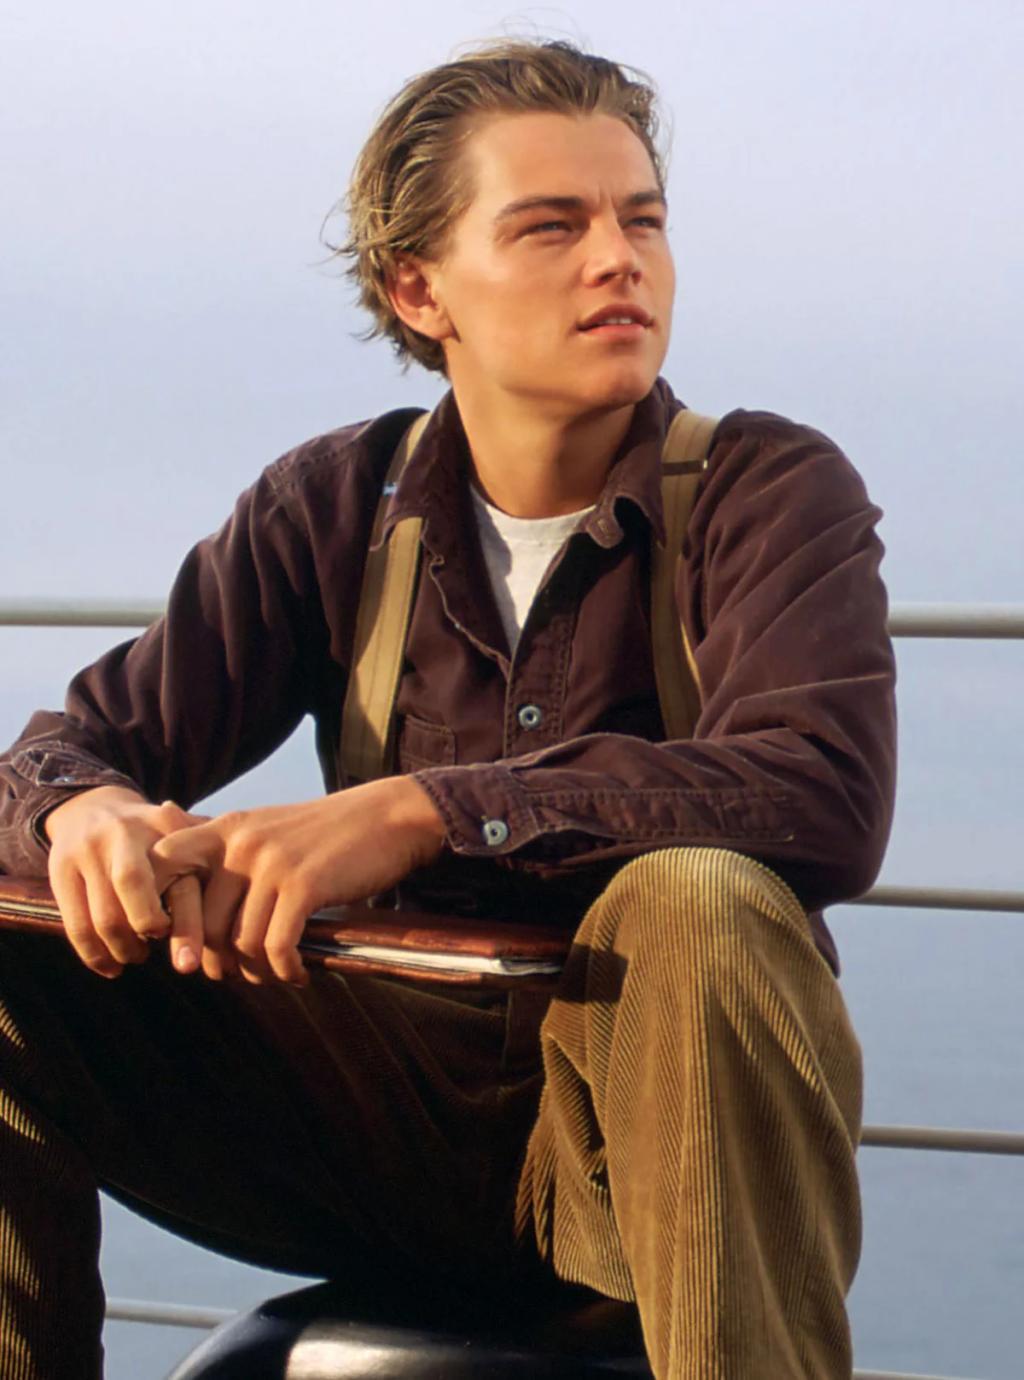 Leonardo-DiCaprio-Home-Was-Decorated-With-Titanic-Items-Promo.webp.jpg